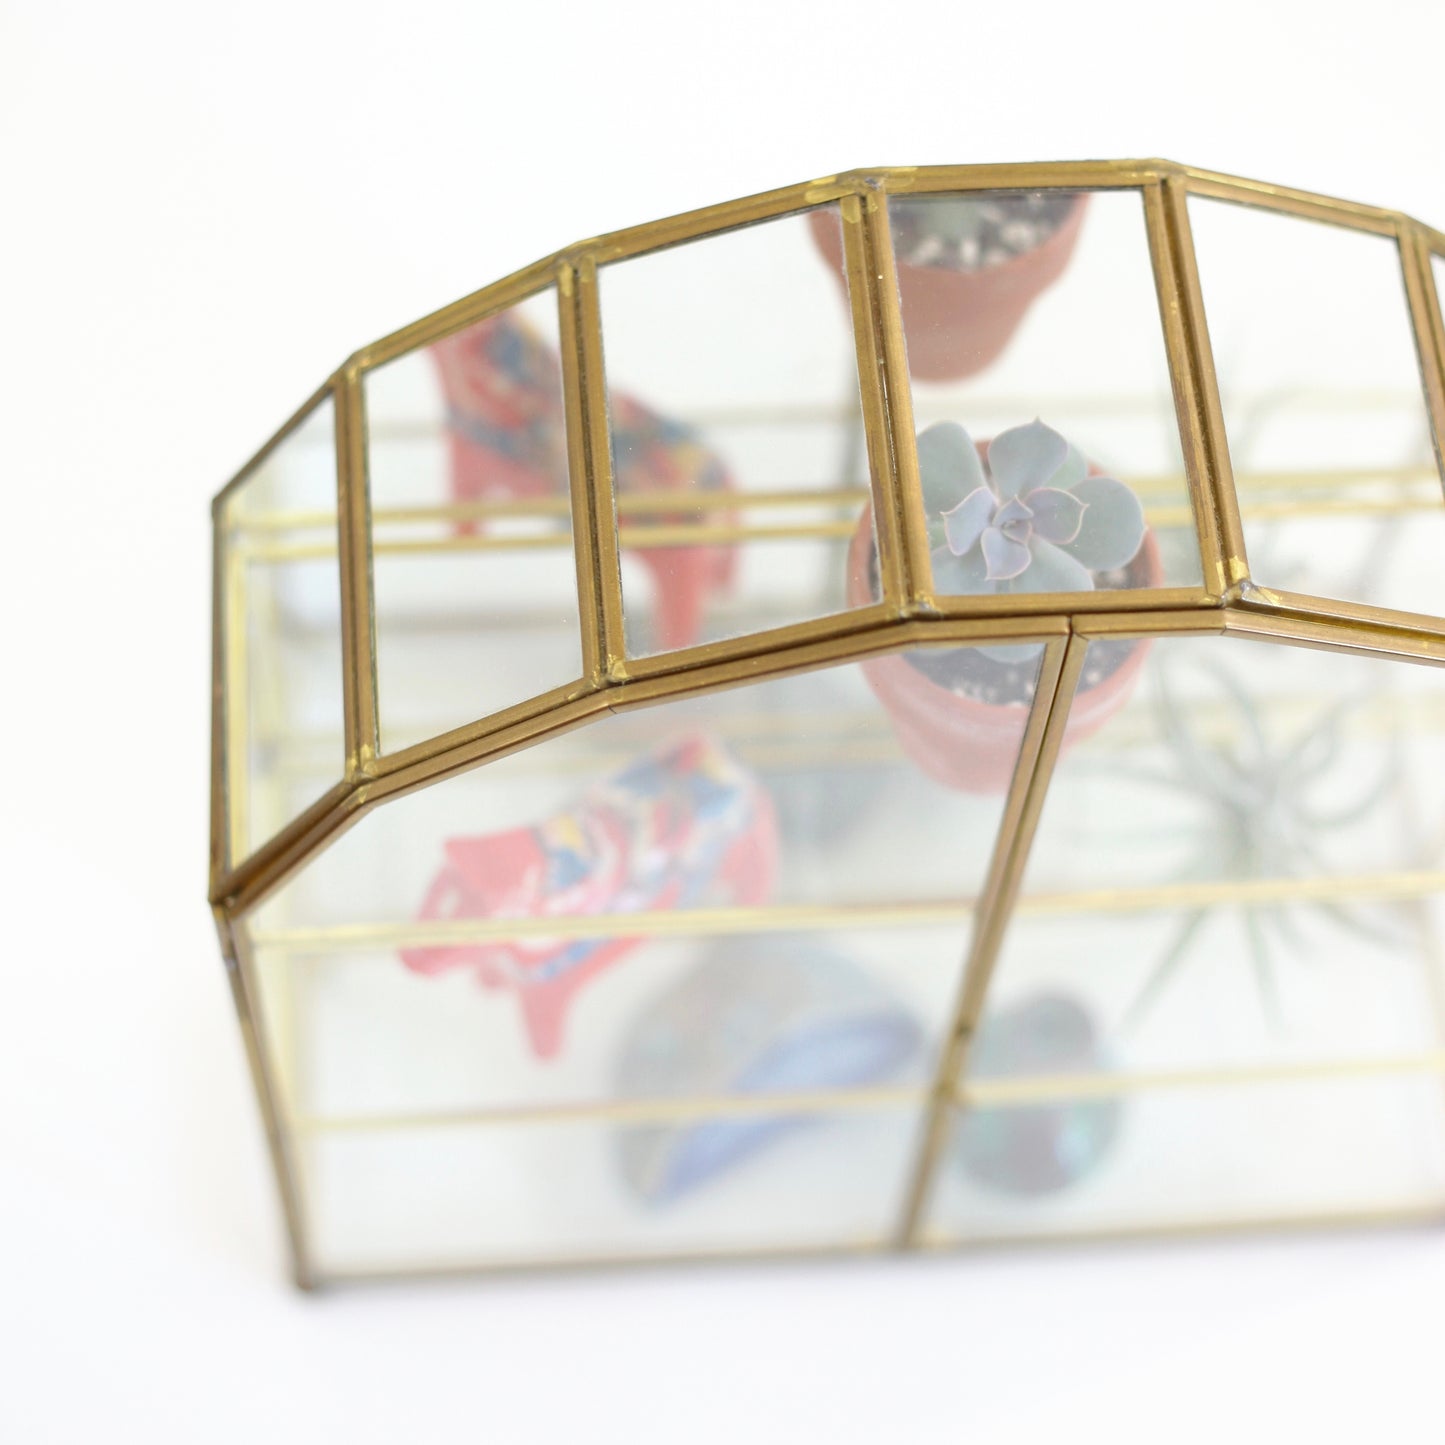 SOLD - Vintage Glass & Brass Mirrored Curio Display Box